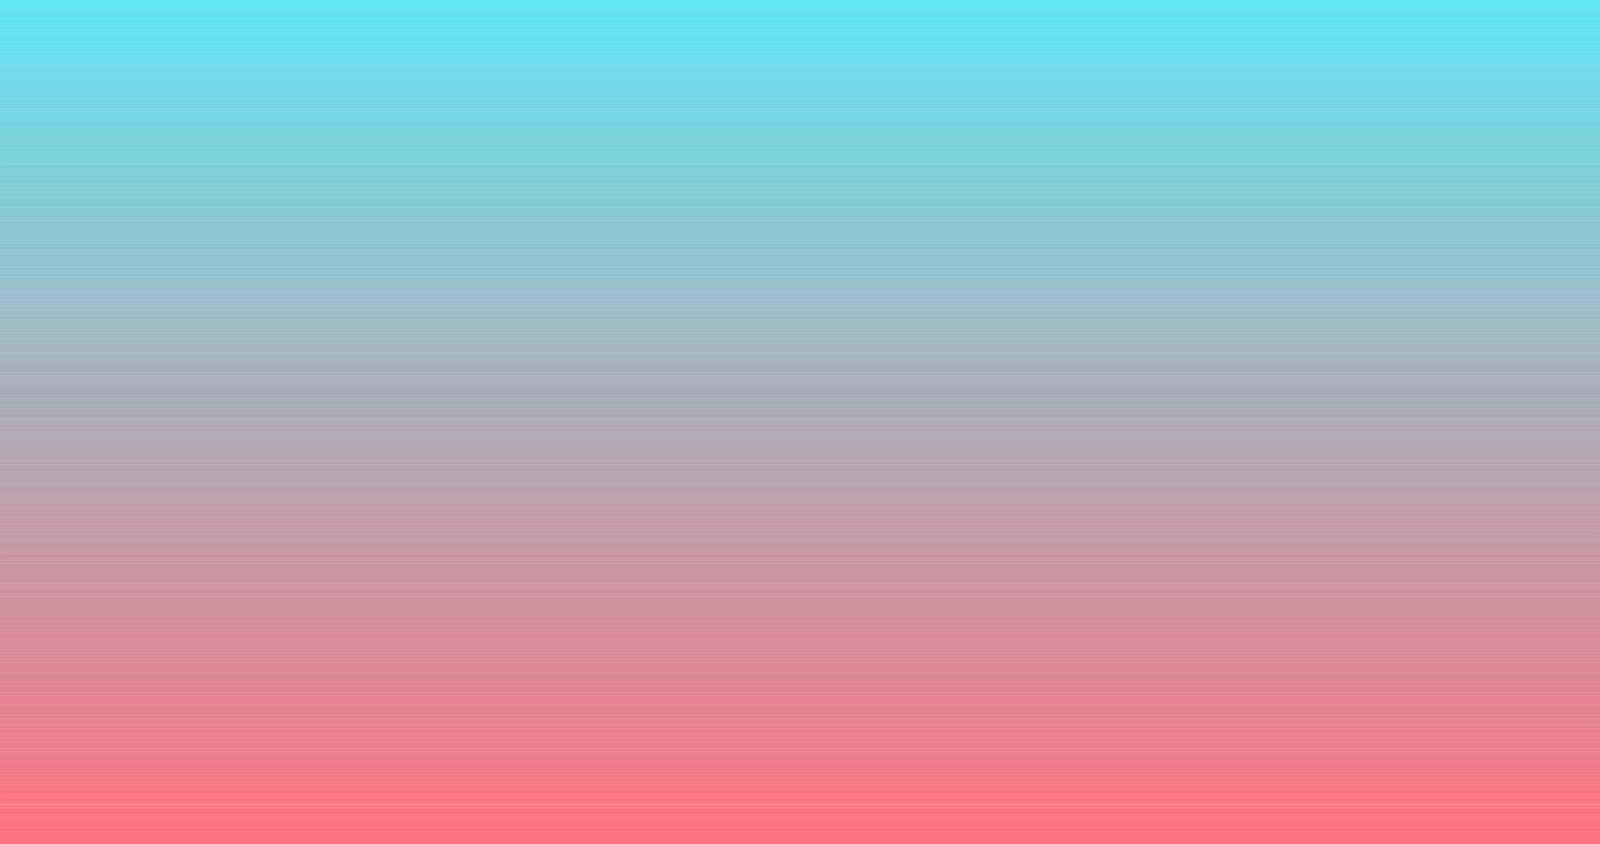 vector pink blue gradient background. Stock vector illustration by Kyrylov